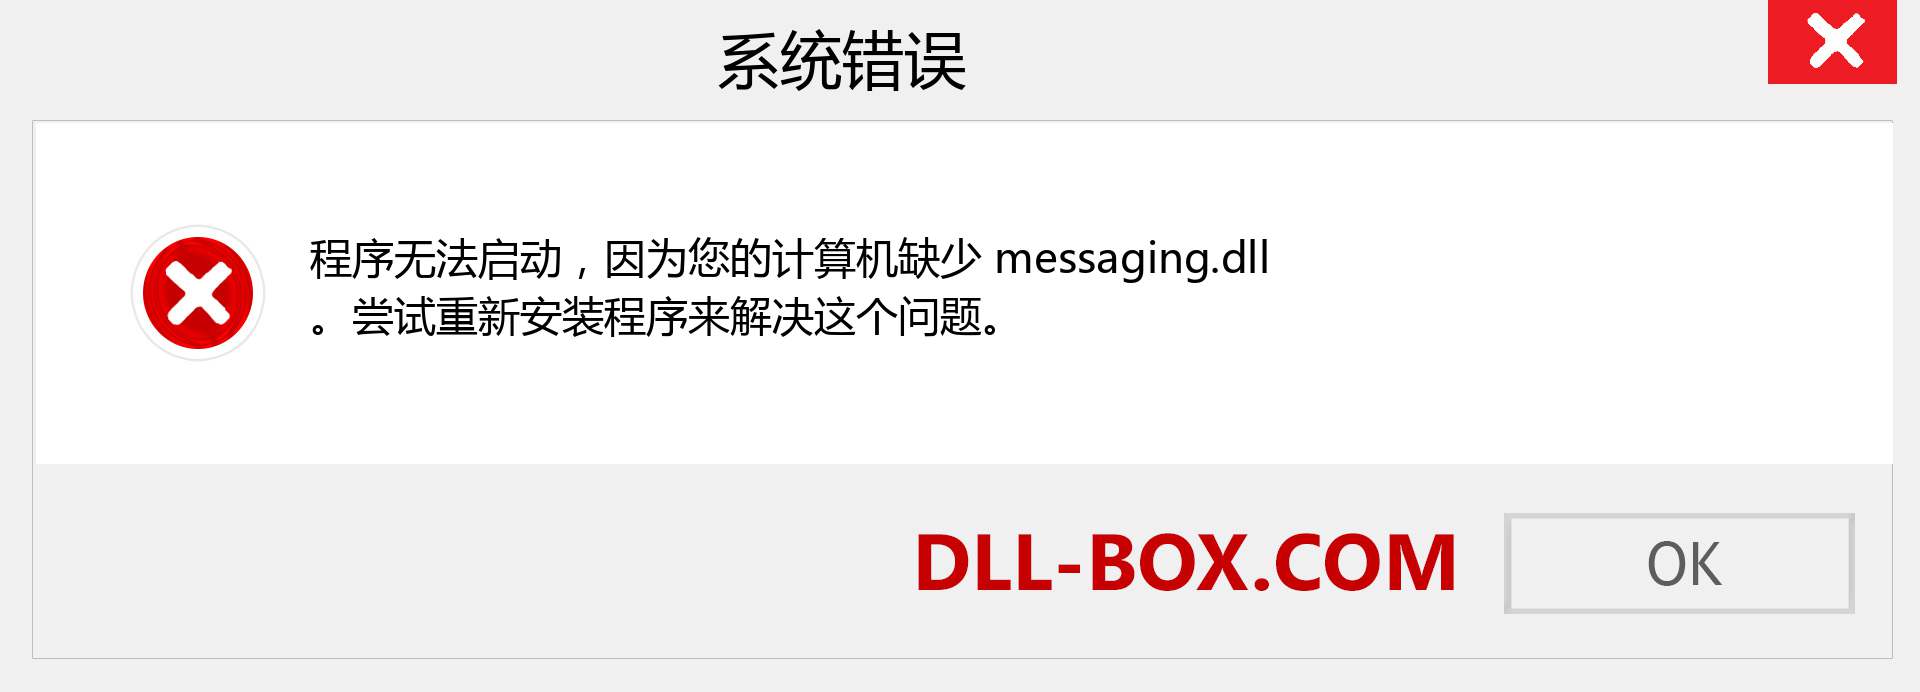 messaging.dll 文件丢失？。 适用于 Windows 7、8、10 的下载 - 修复 Windows、照片、图像上的 messaging dll 丢失错误